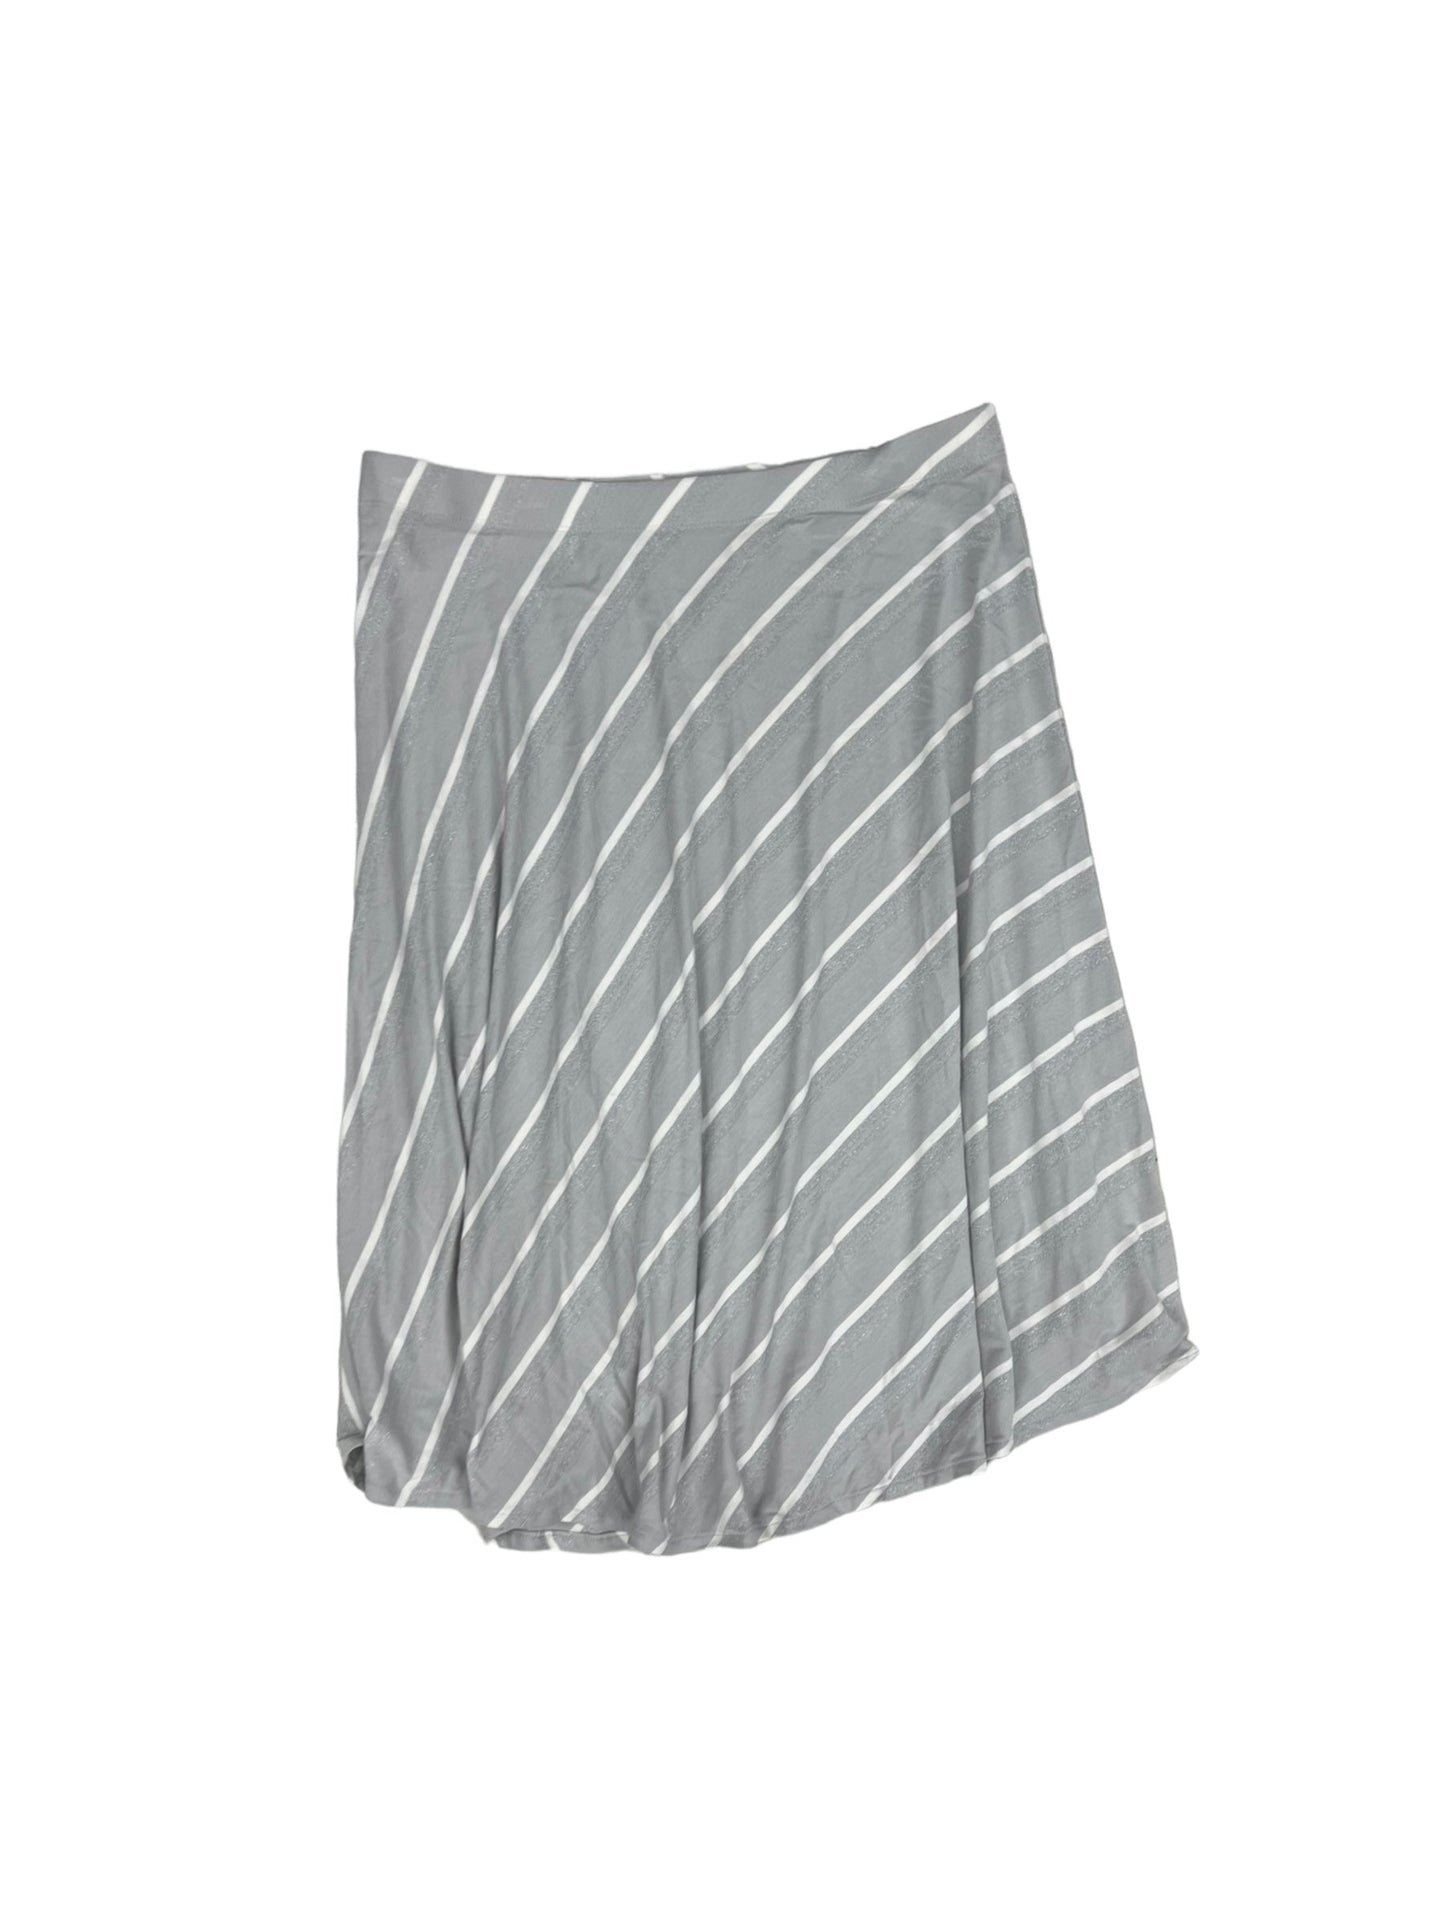 Grey Skirt Midi Chicos, Size M